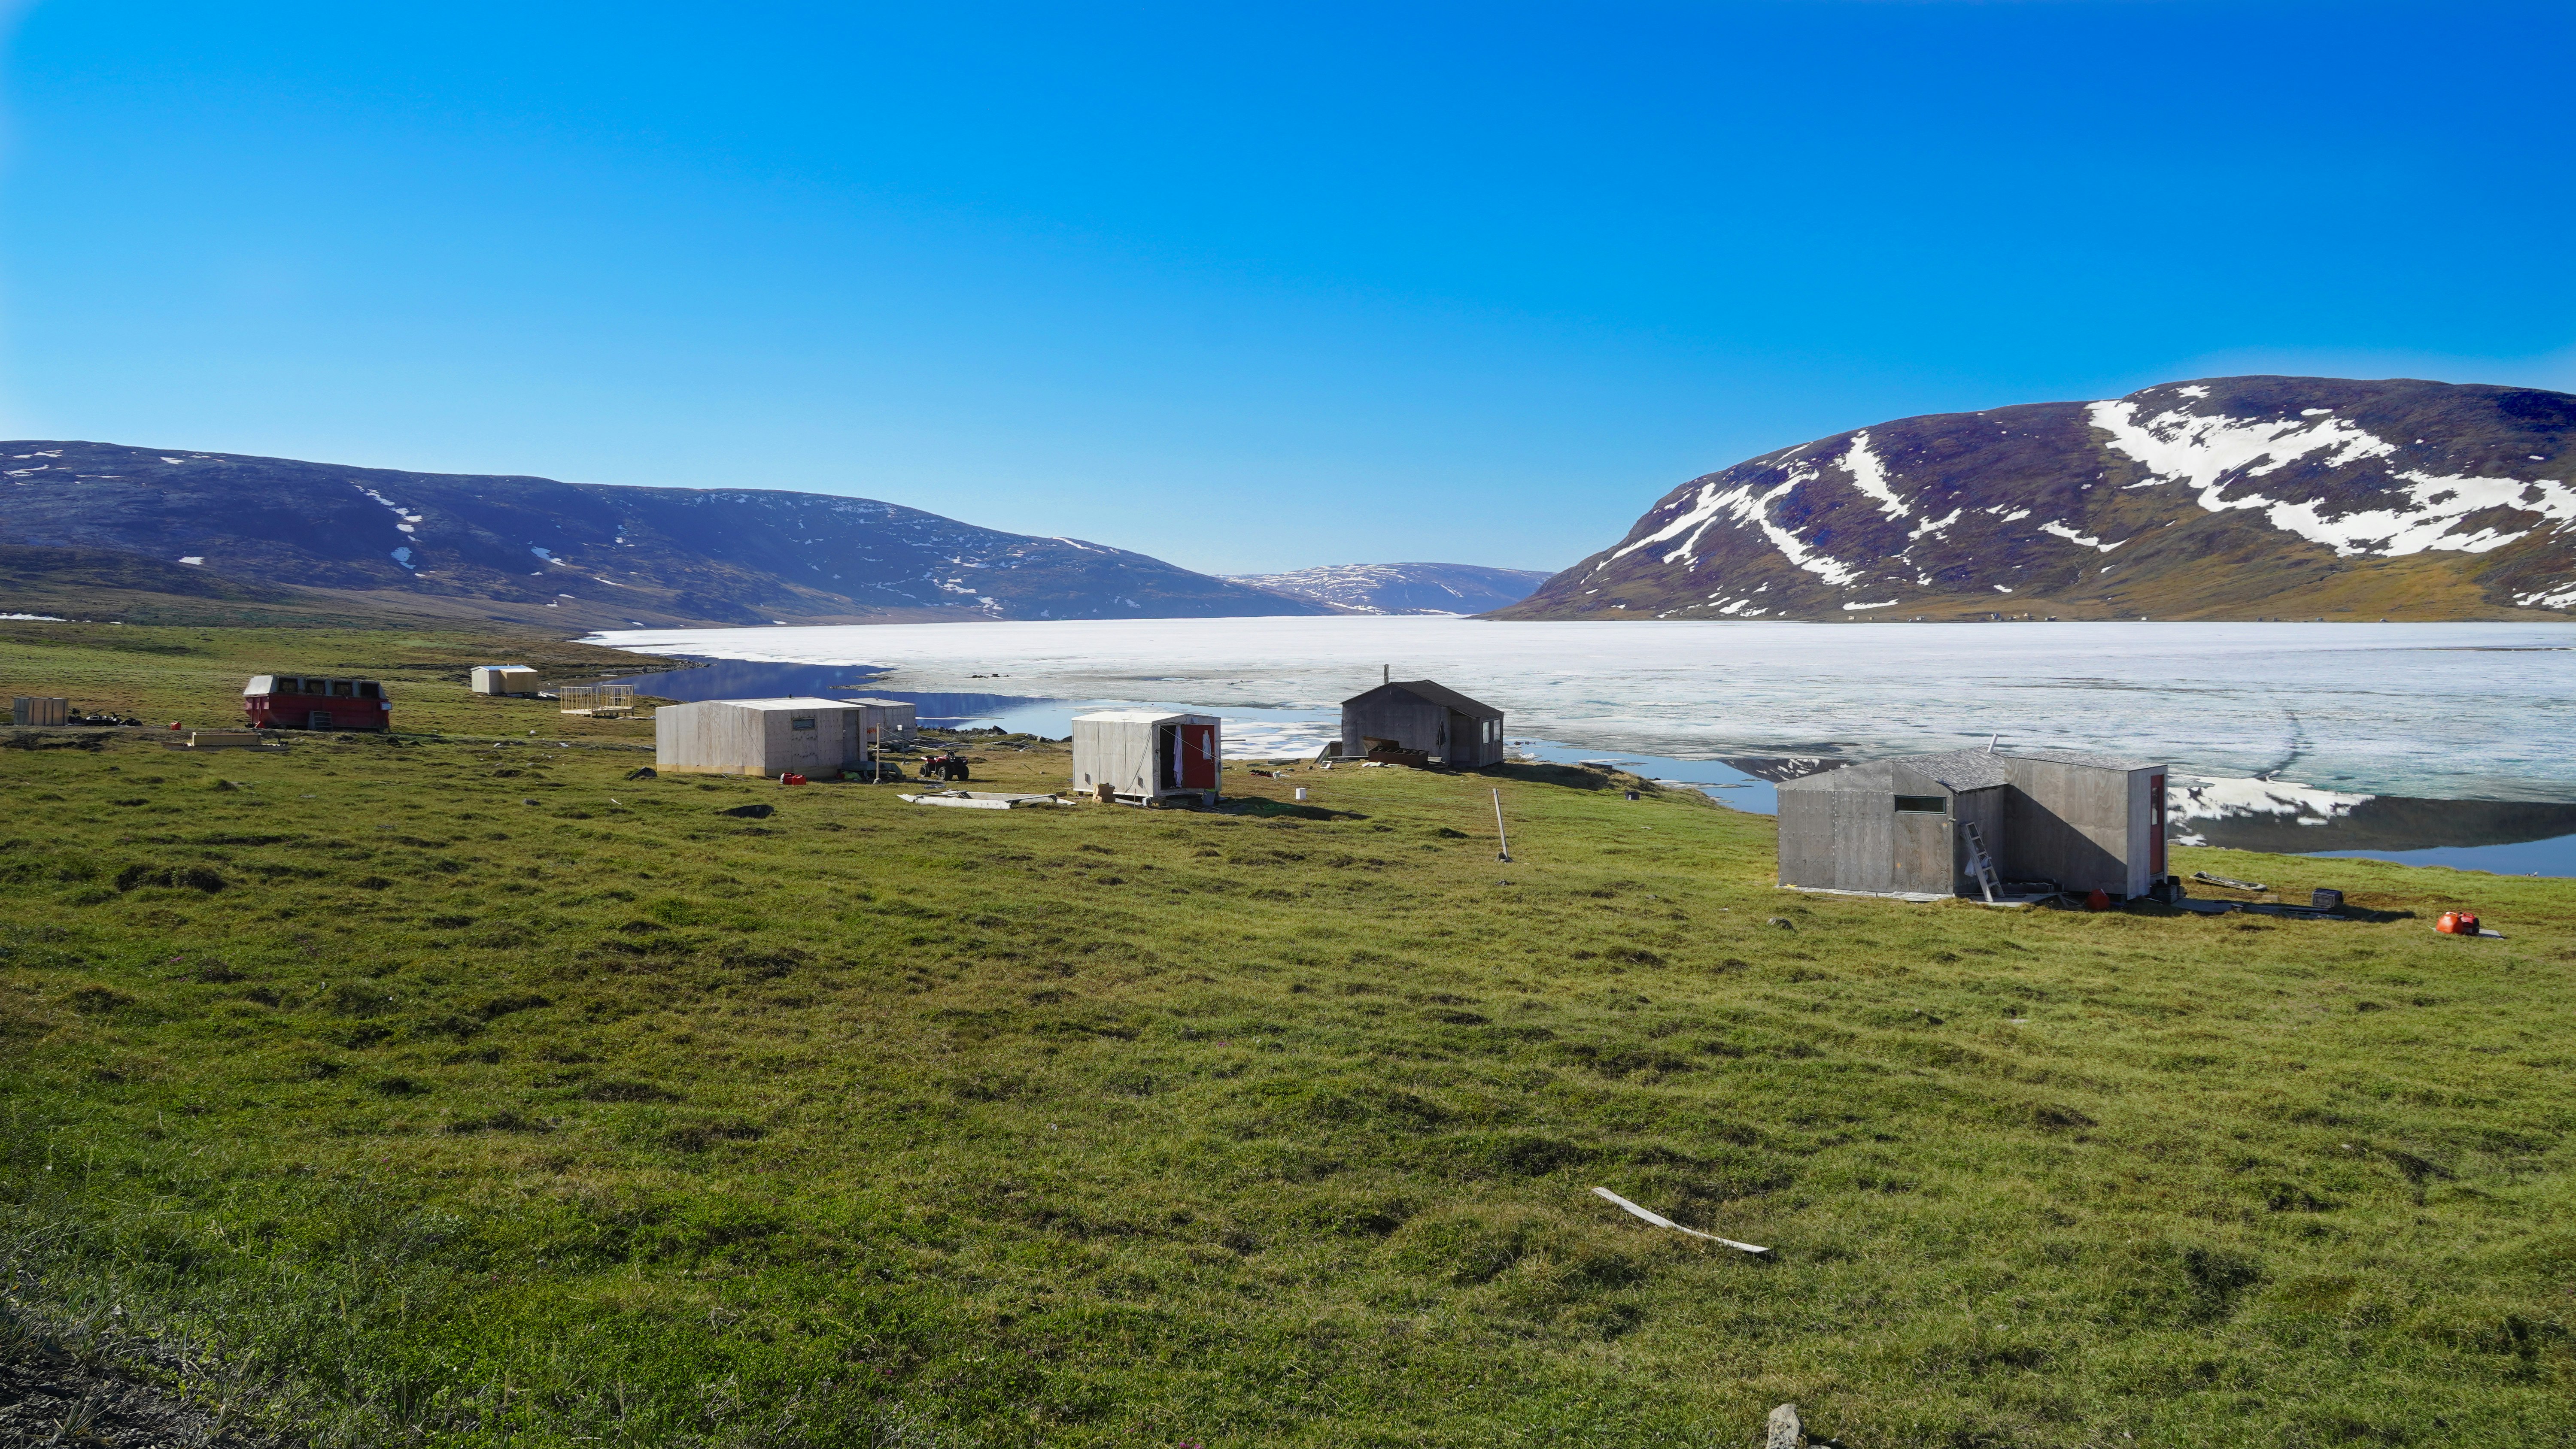 Inuit hunting and fishing camp. Deception Bay, Nunavik.
Link: https://www.damononroad.com/raglan/